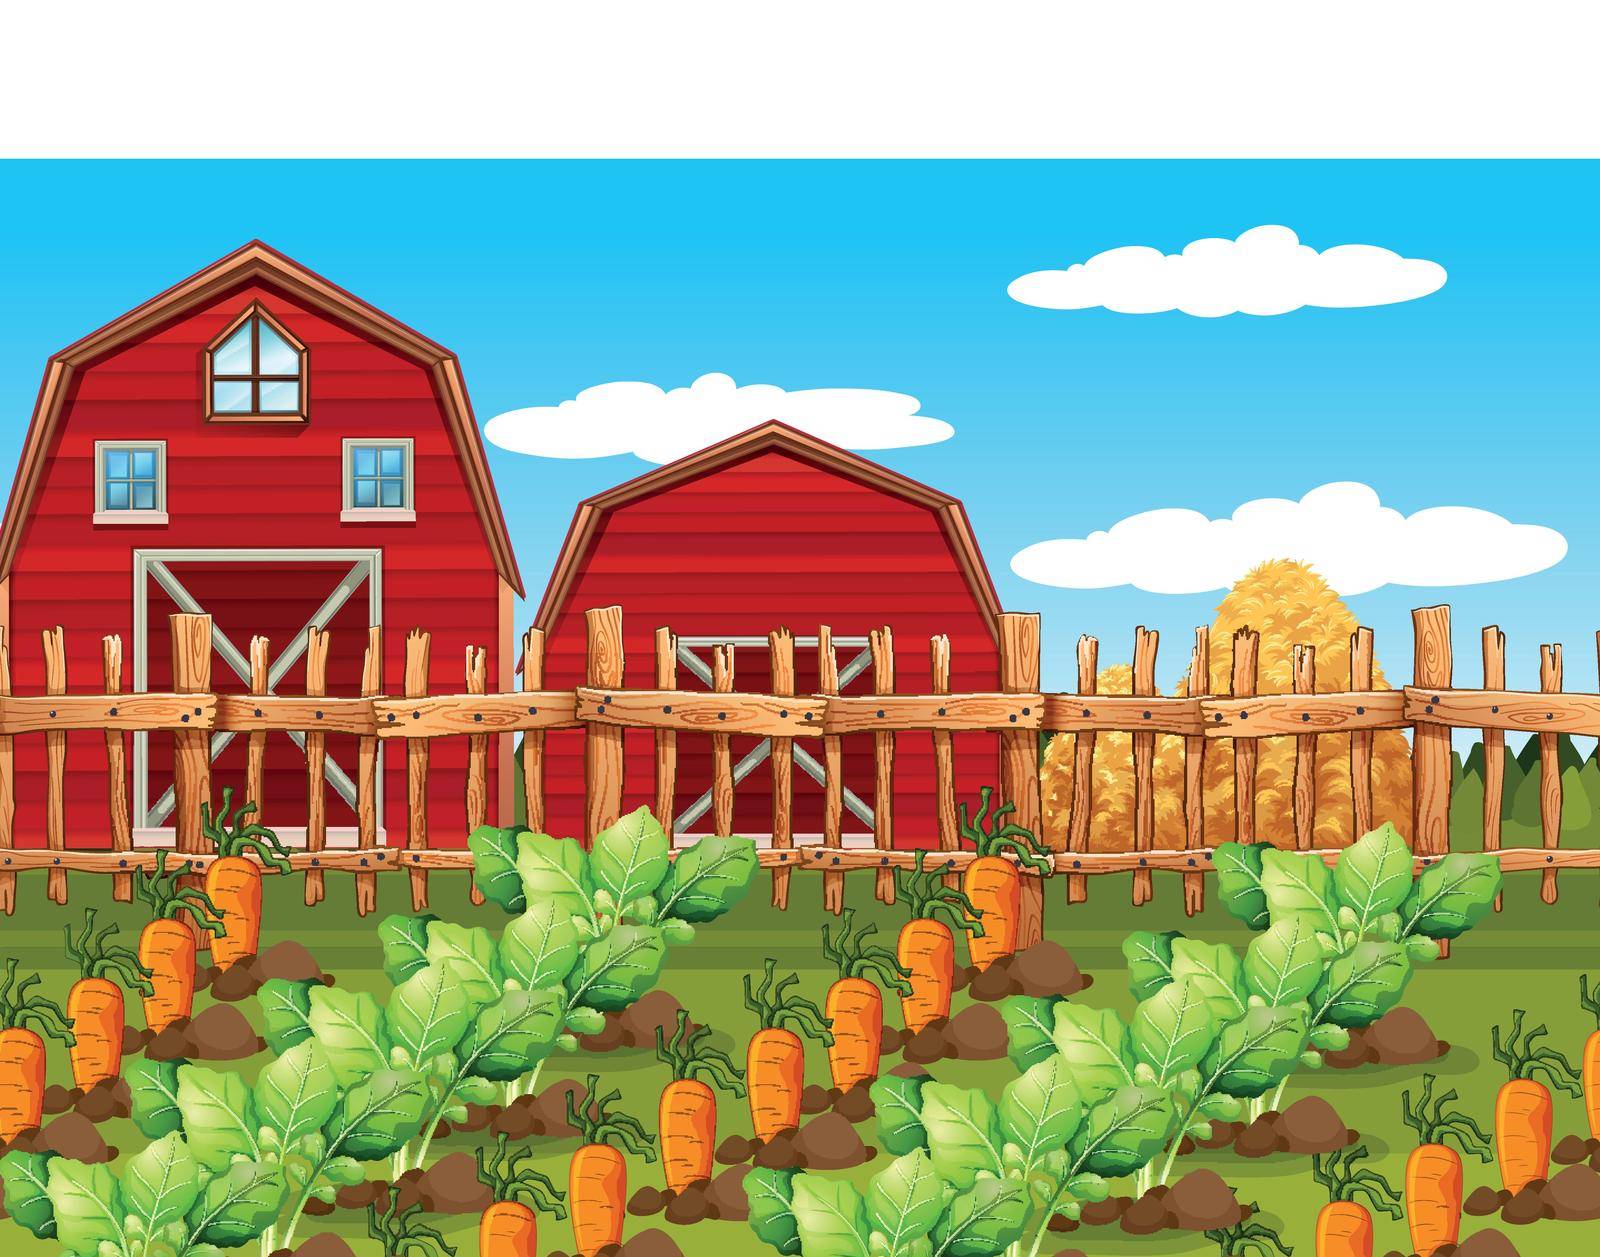 A rural farm landscape illustration